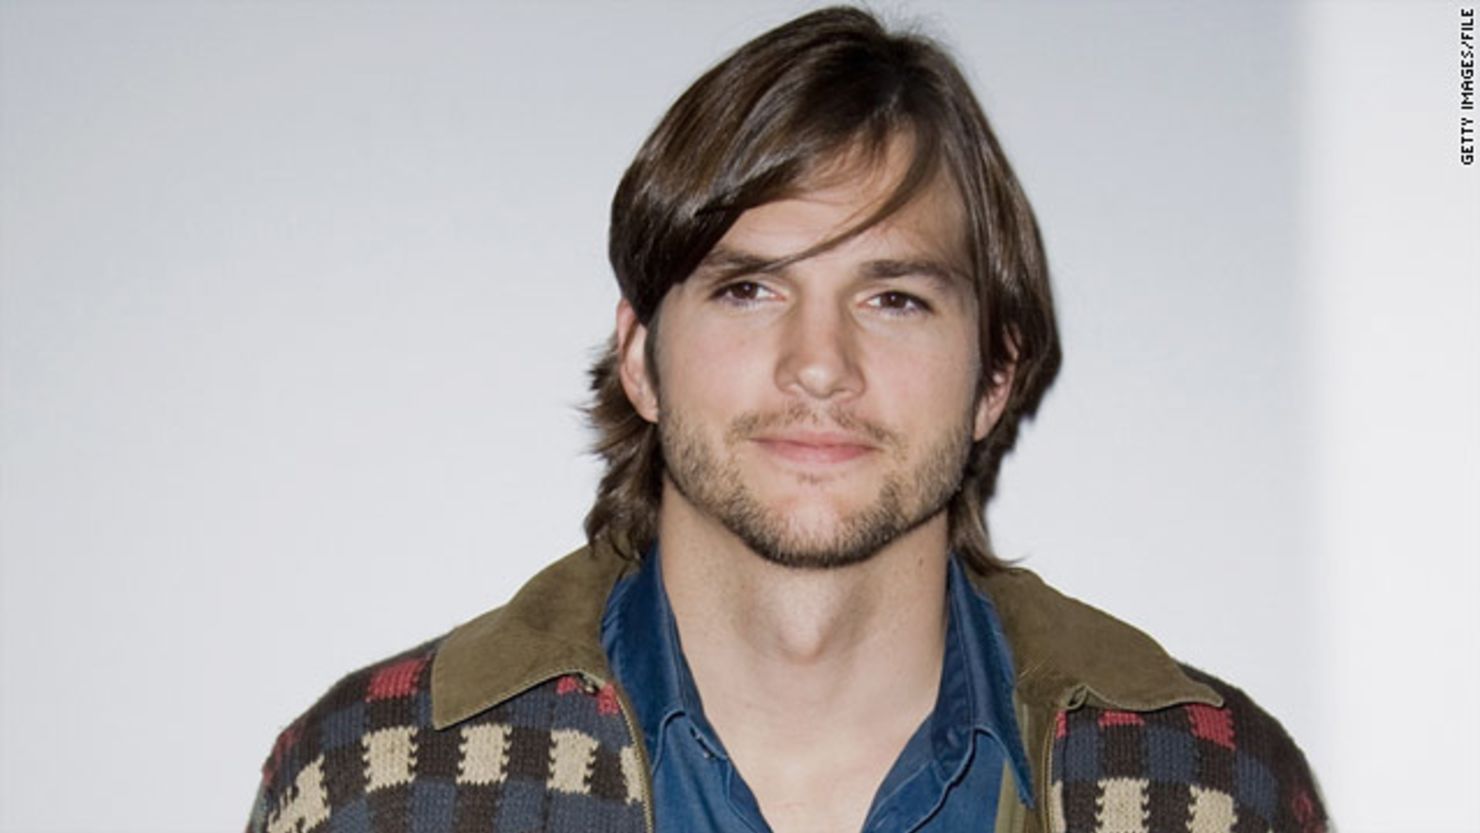 Ashton Kutcher sustituirá a Charlie Sheen en "Two and a Half Men".